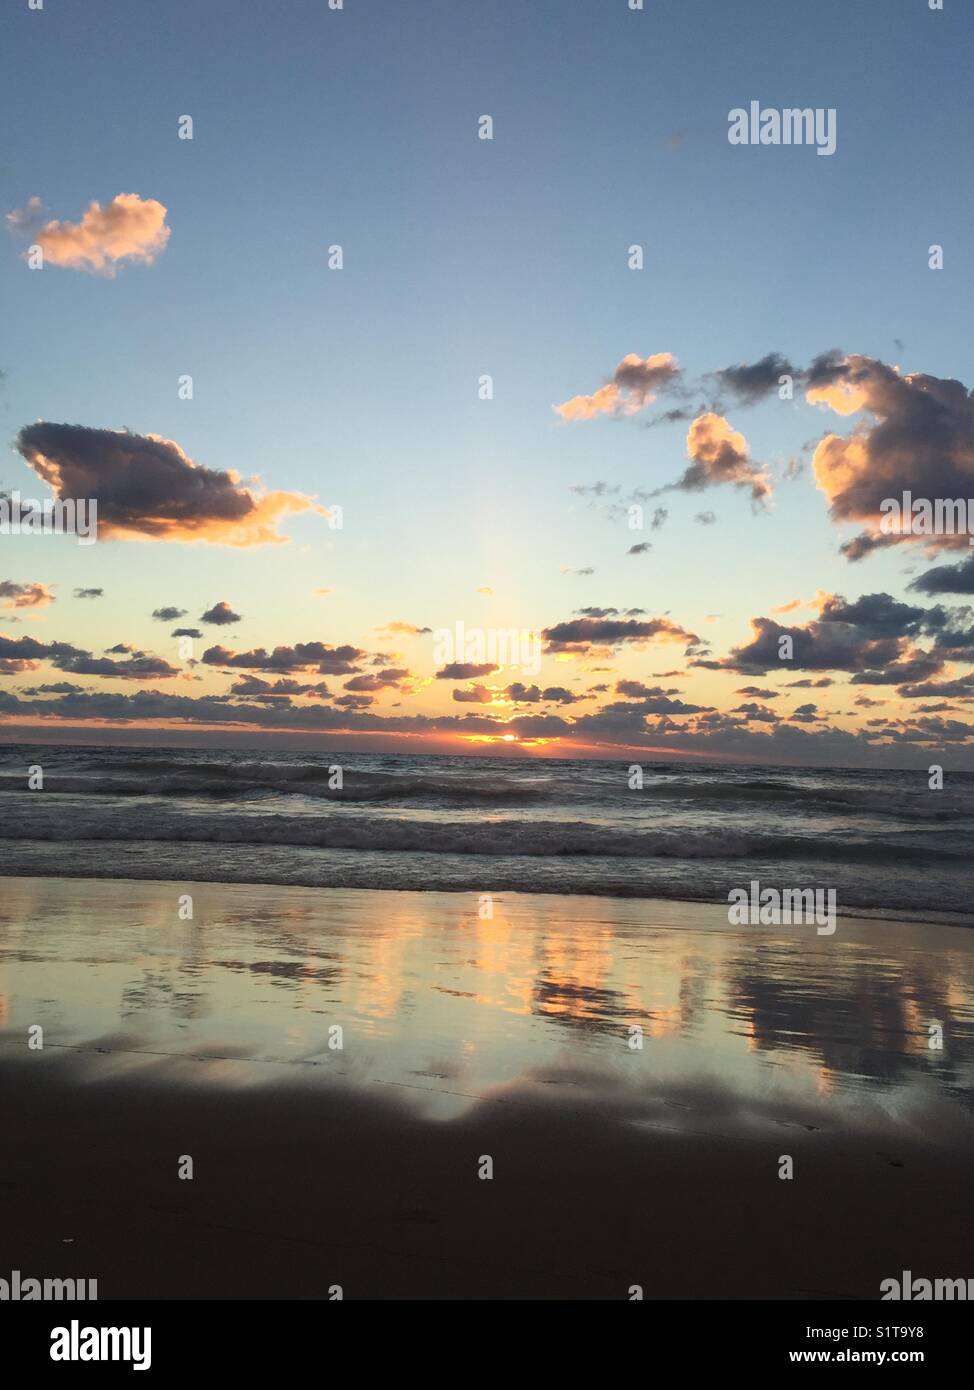 Sea mddil east , haz , sun , sunset,shadow, cloud, wave,bleu,orange, sand Stock Photo